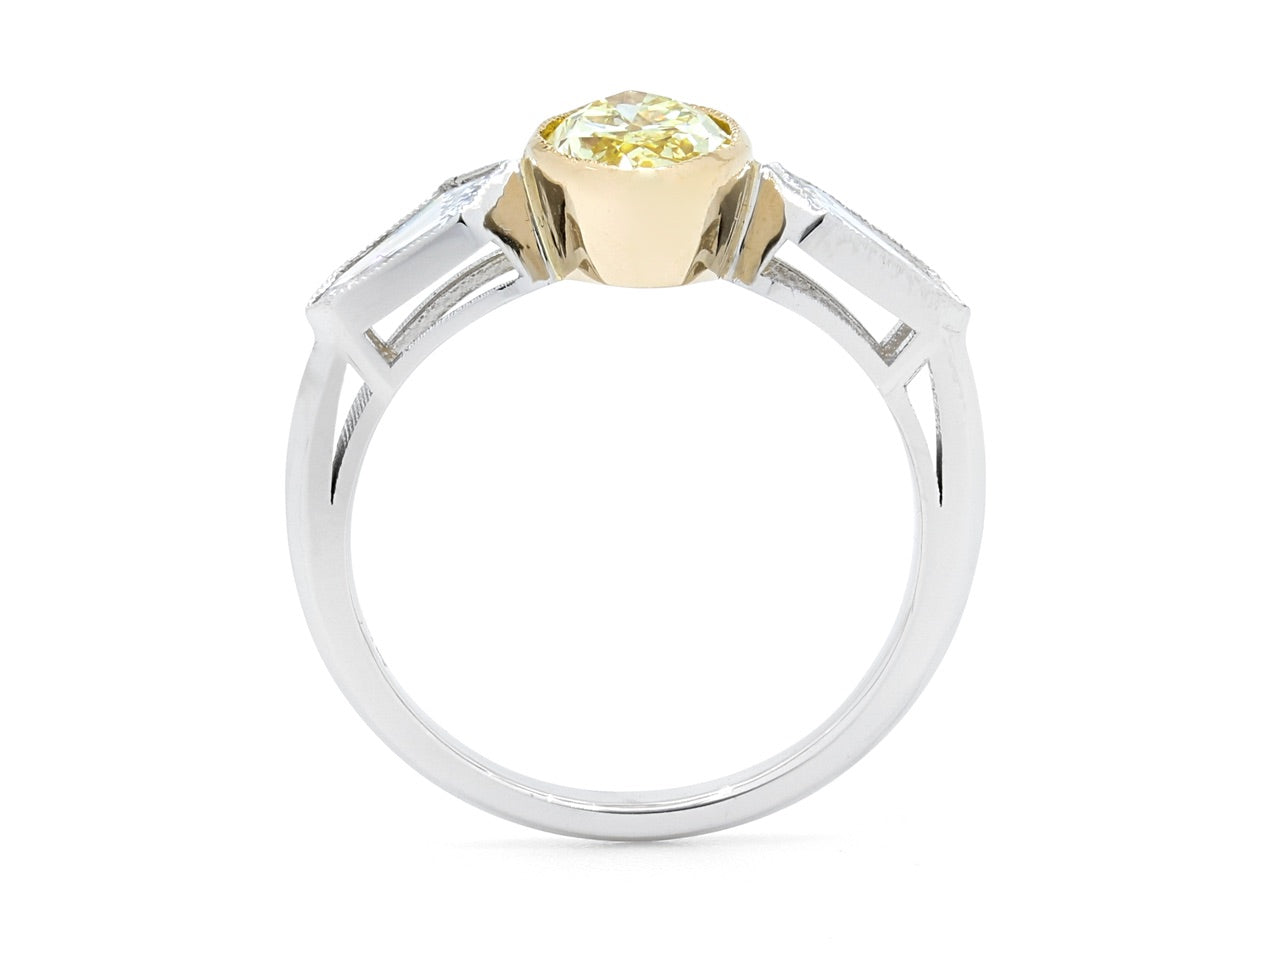 Beladora 'Bespoke' Marquise Fancy Intense Yellow Diamond, 1.13 carats, Ring in Platinum and 18K Gold